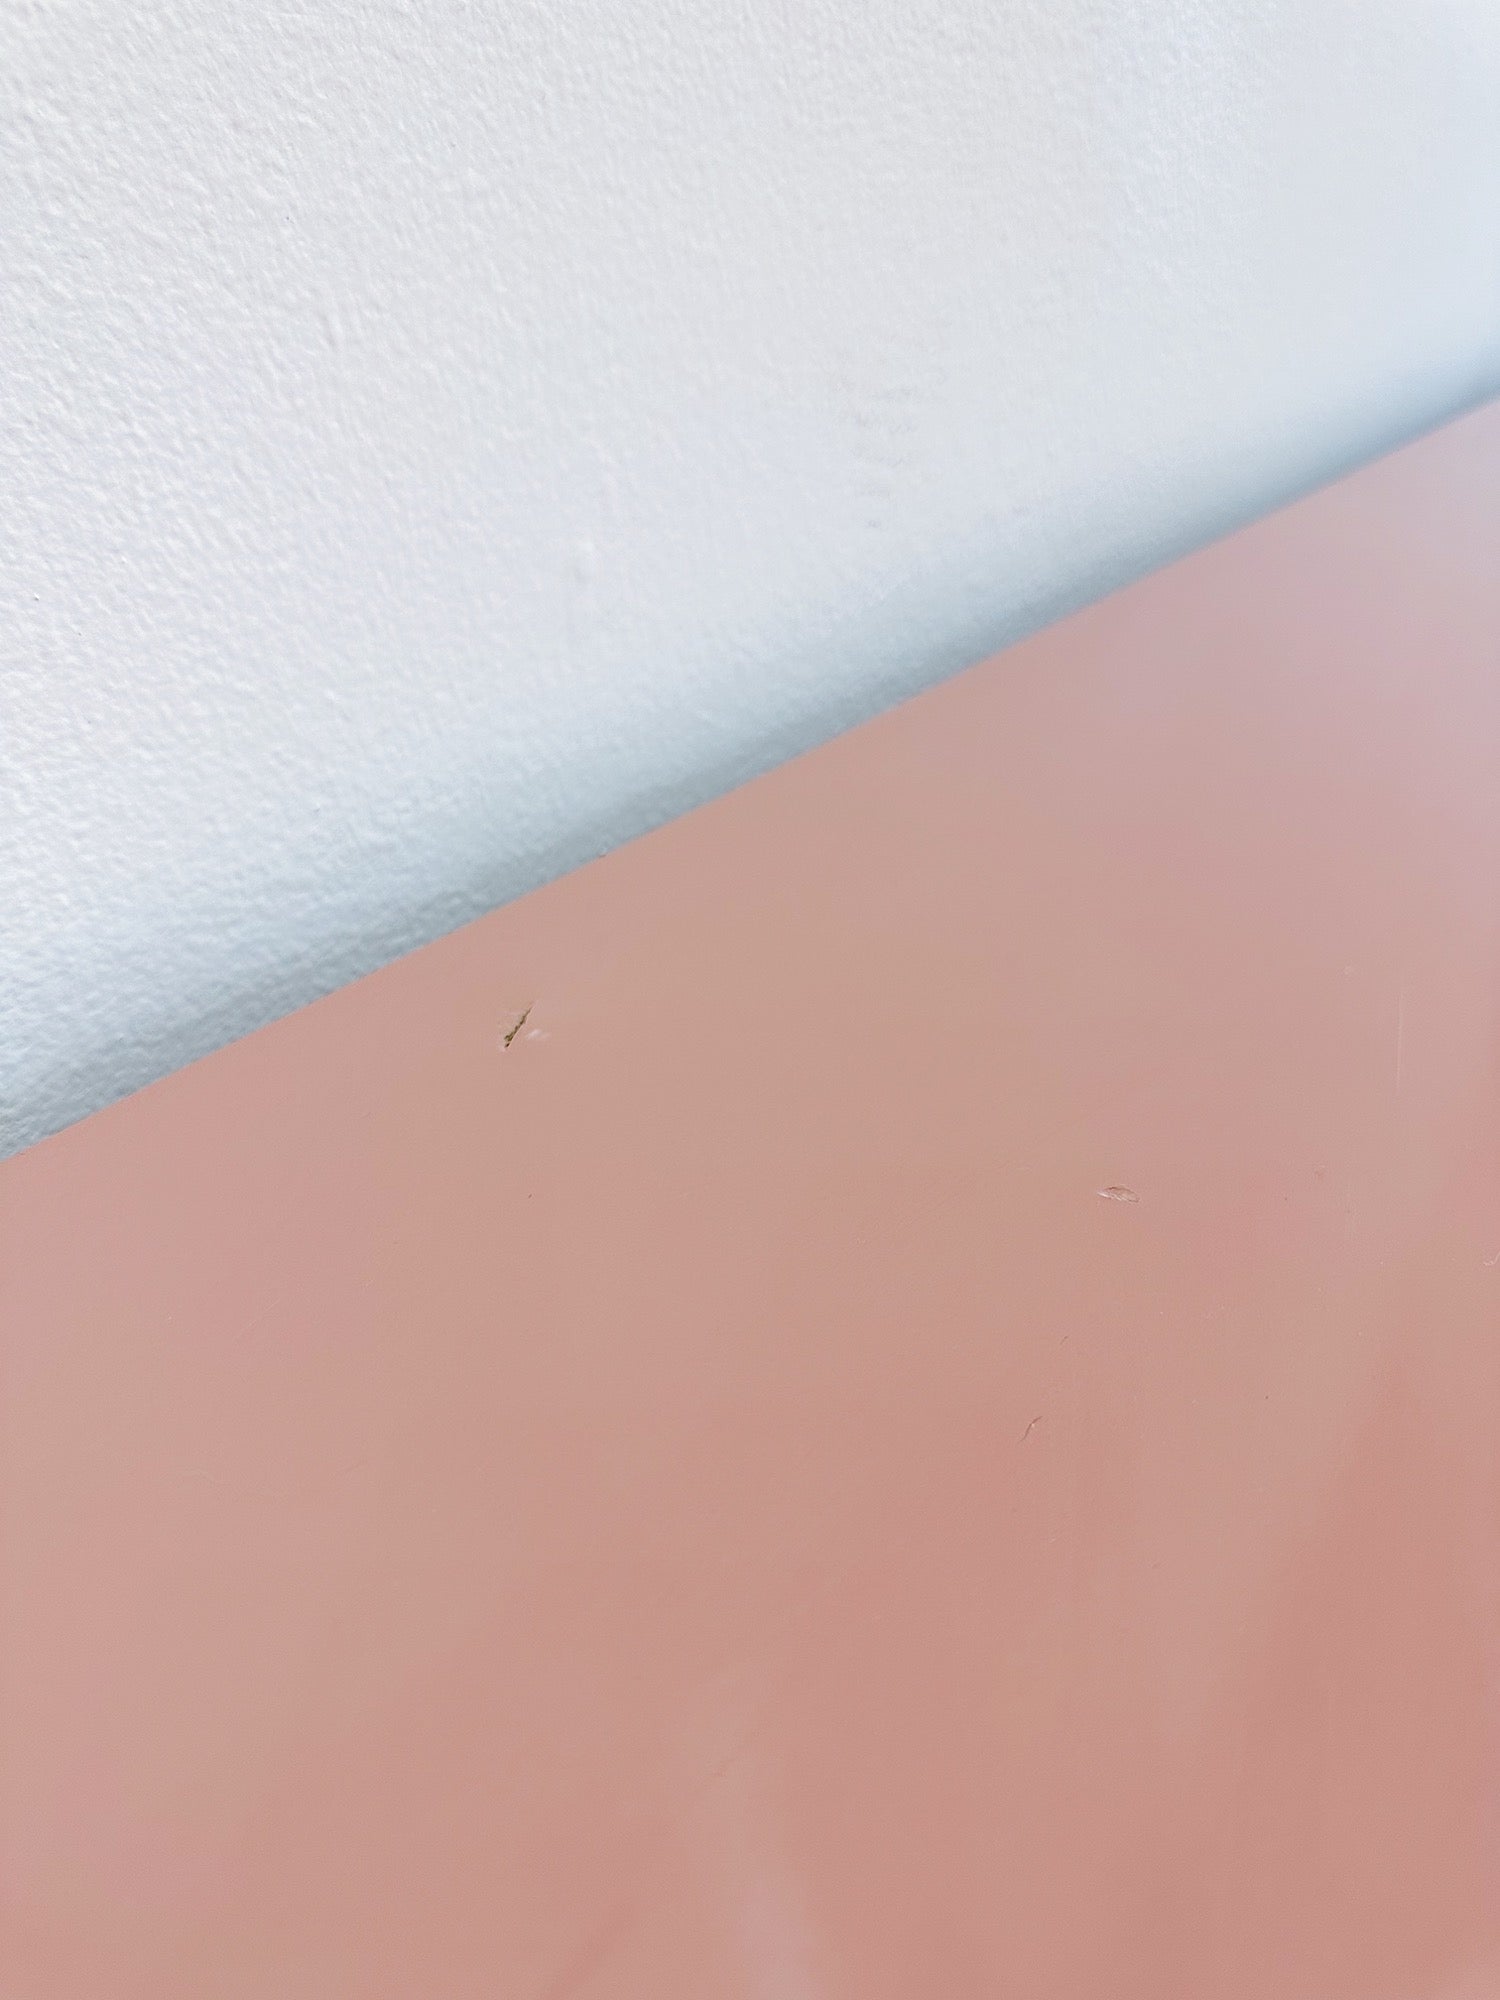 Pink Laminate Wicker-Sided Low Dresser - Rehaus